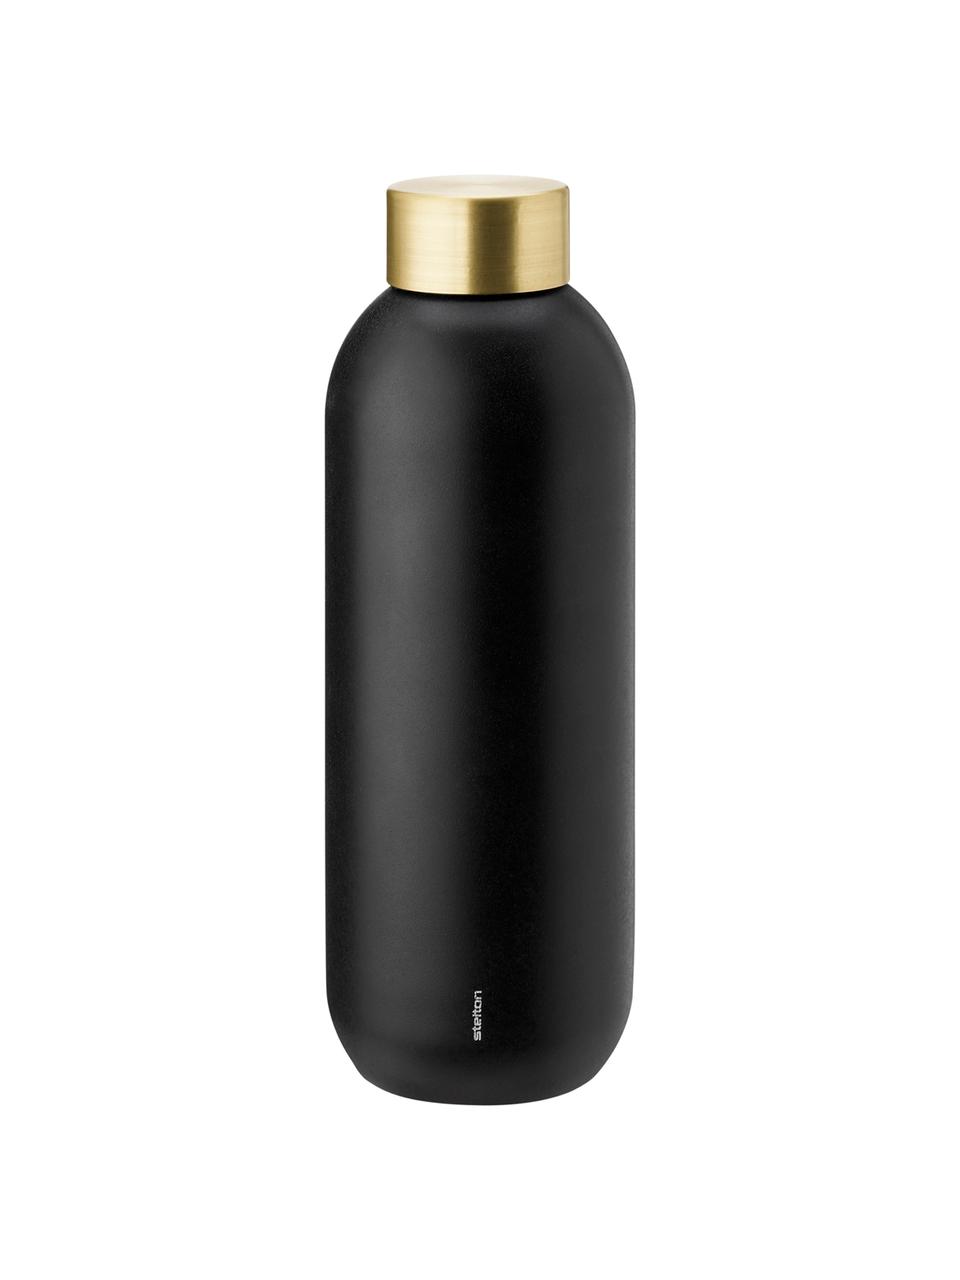 Fľaša na vodu Collar, Konštrukcia: matná čierna Skrutka: mosadzná